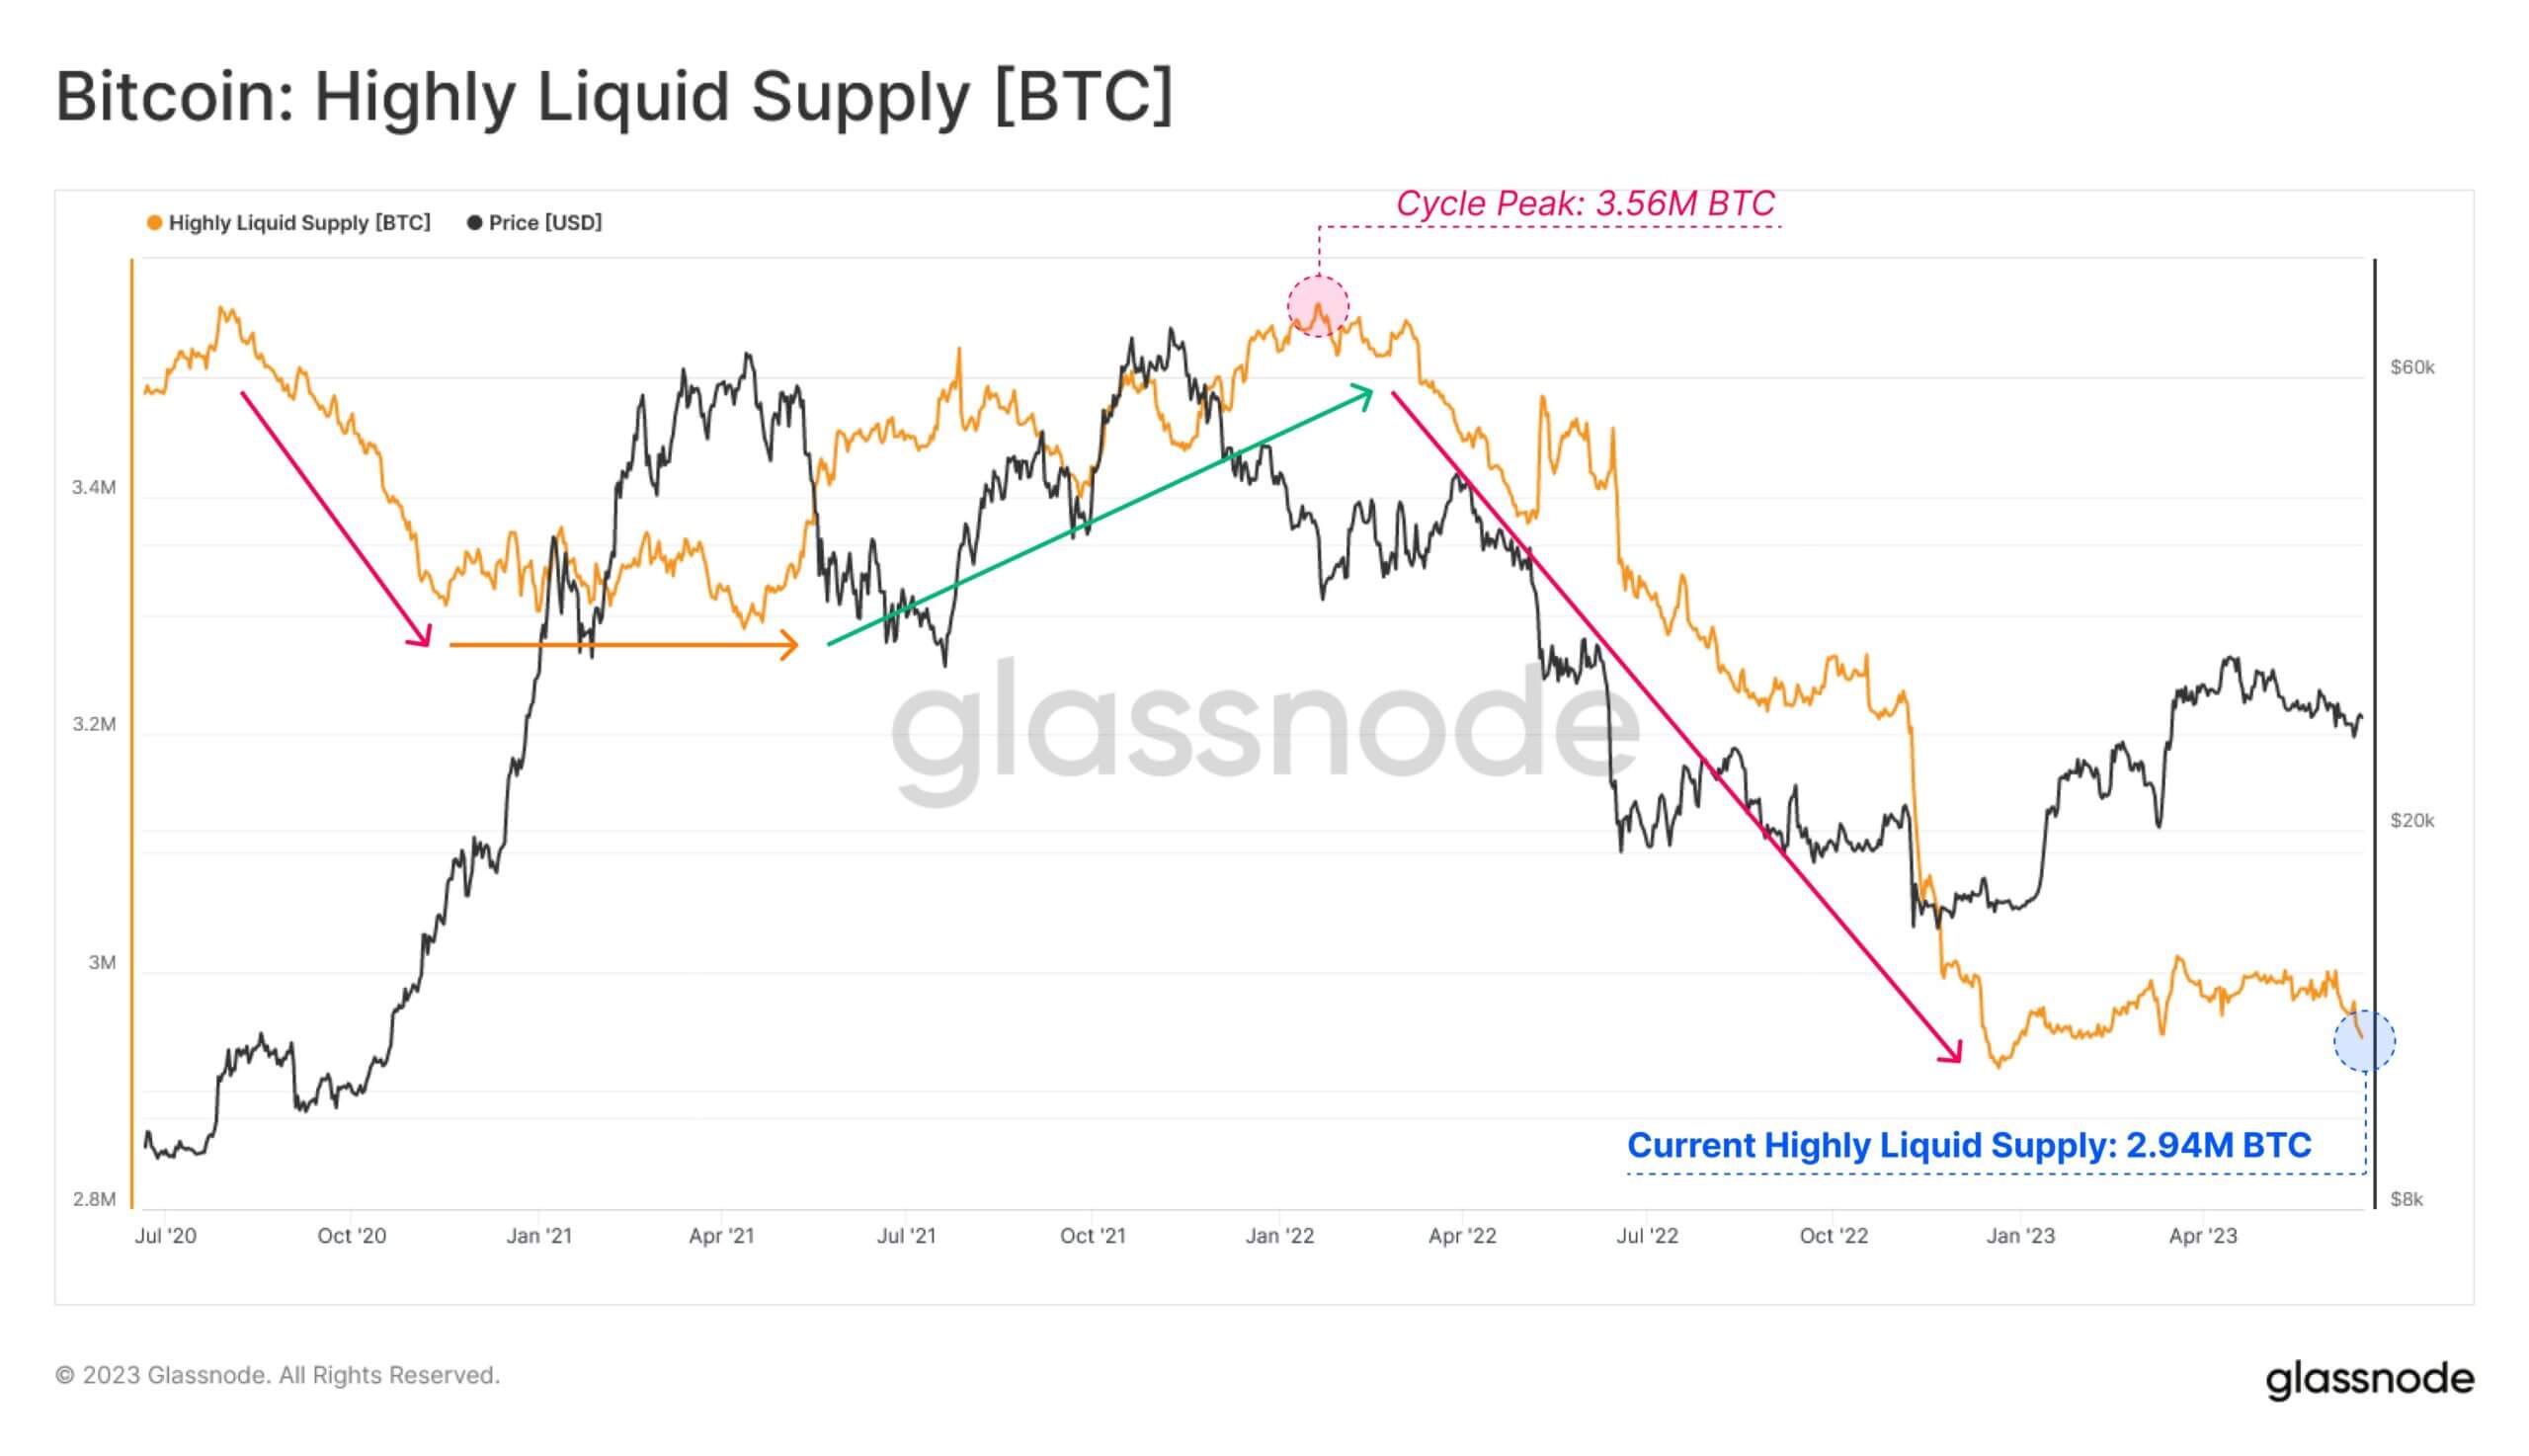 Highly Liquid Supply: (Source: Glassnode)